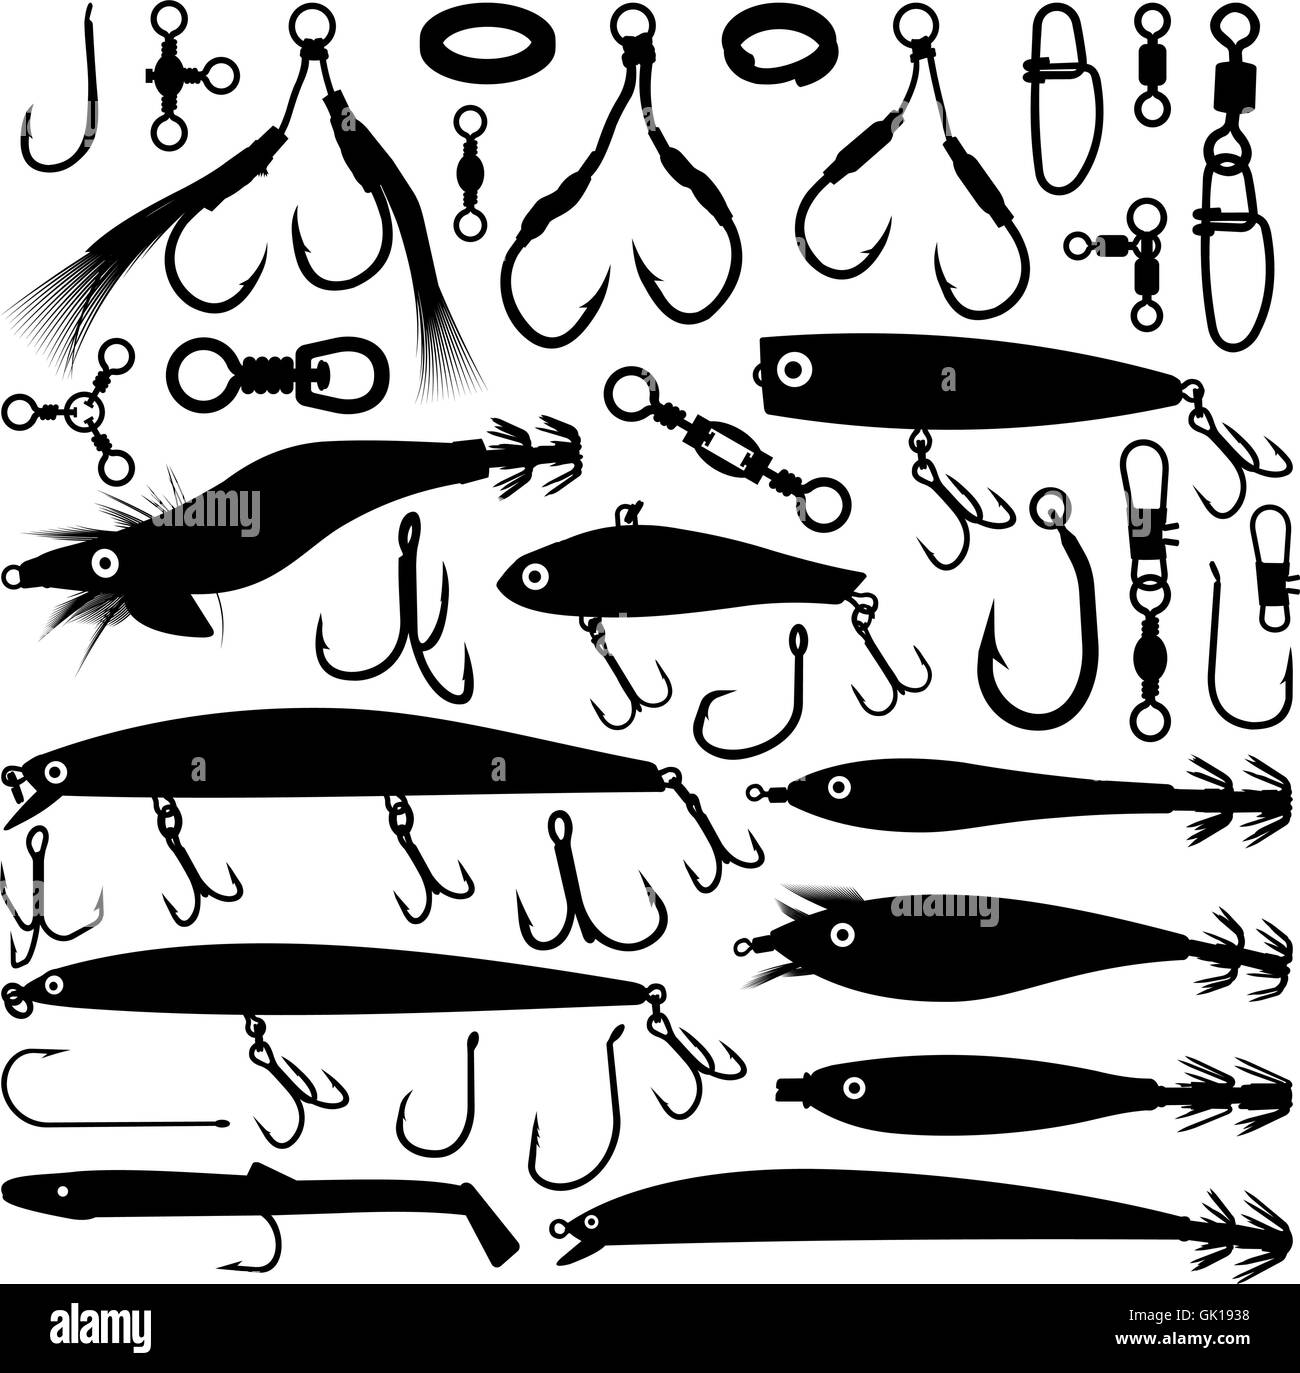 Fishing Lure Vector Illustration on White Background Stock Vector -  Illustration of salmon, jackal: 193278735, fishing lures vector 